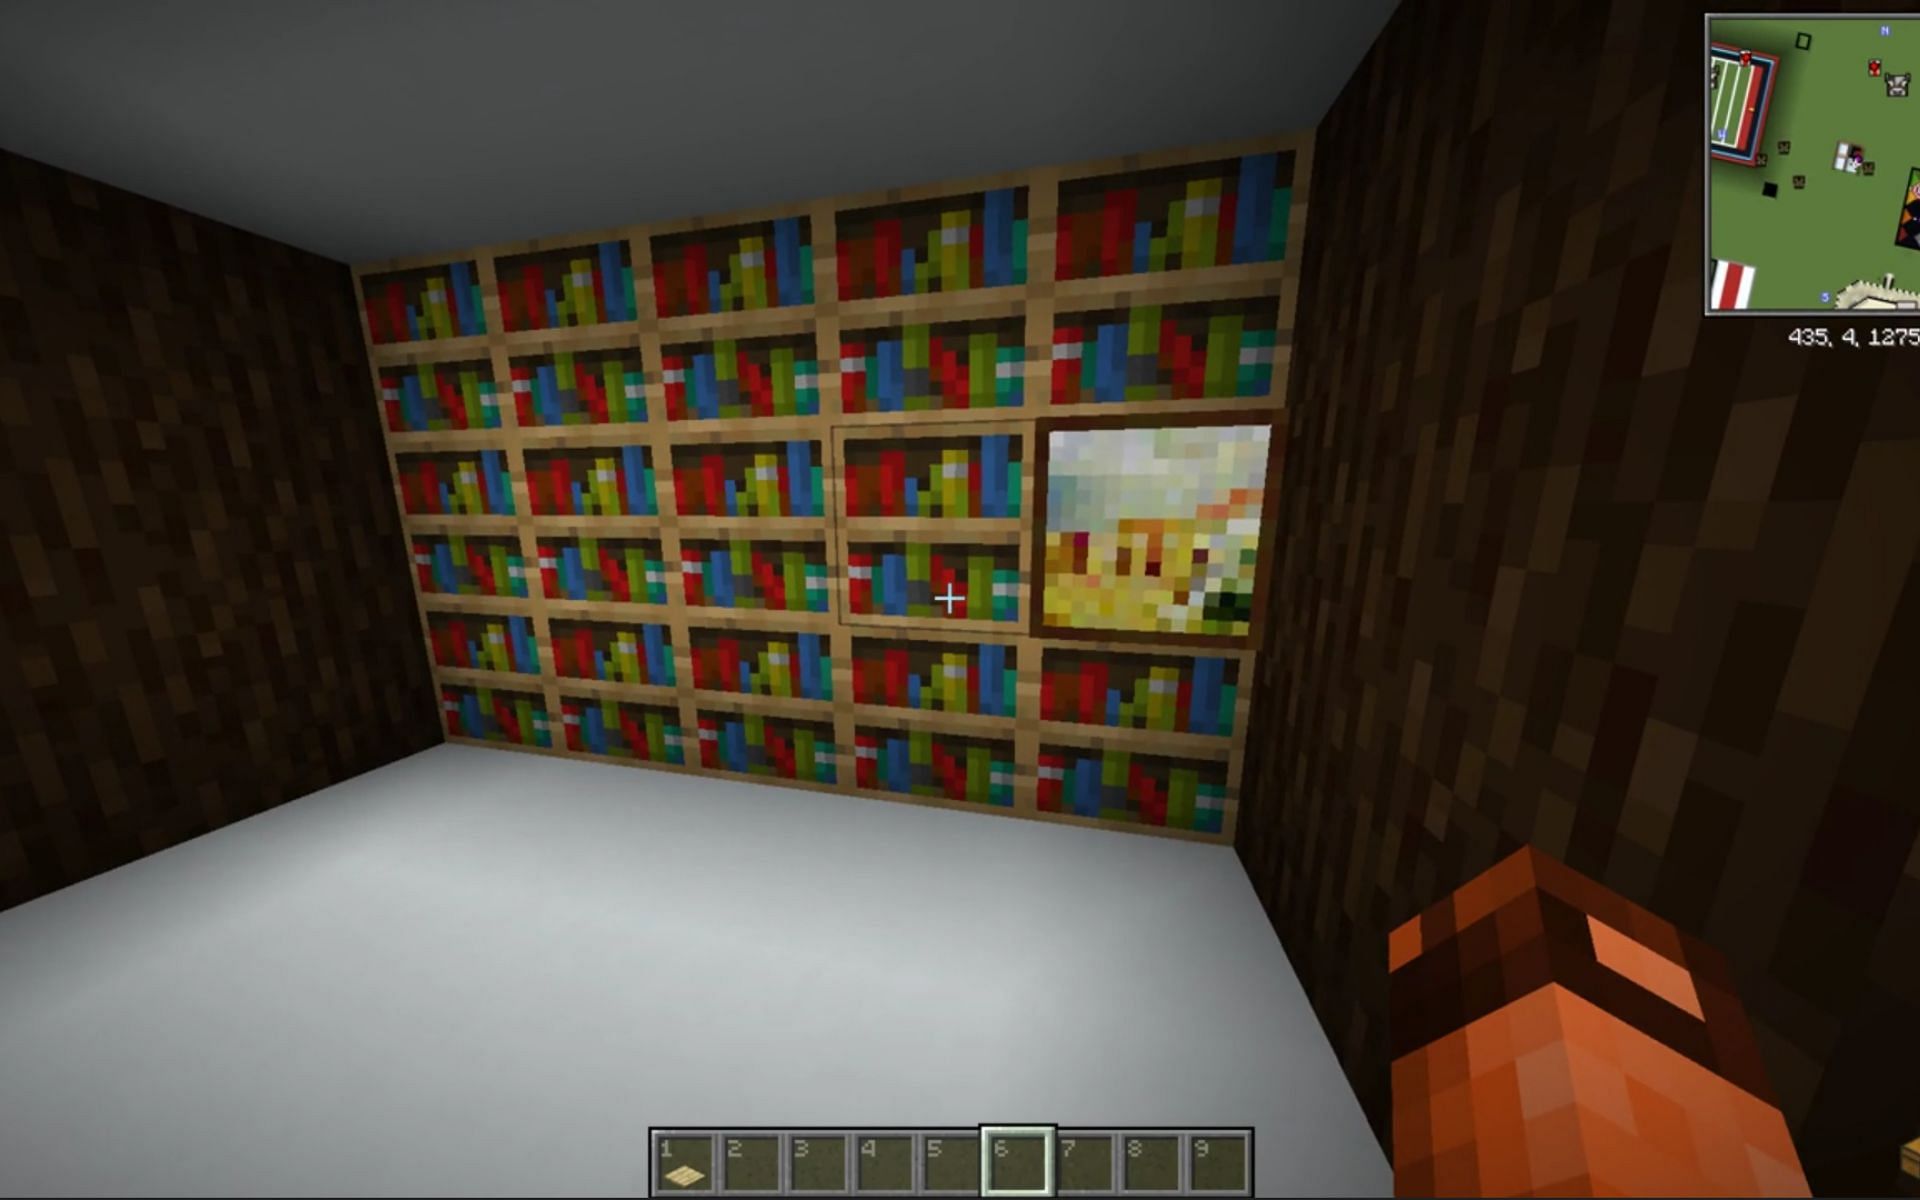 A chest hidden underneath the bookshelves (Image via u/manimanito100/Reddit)